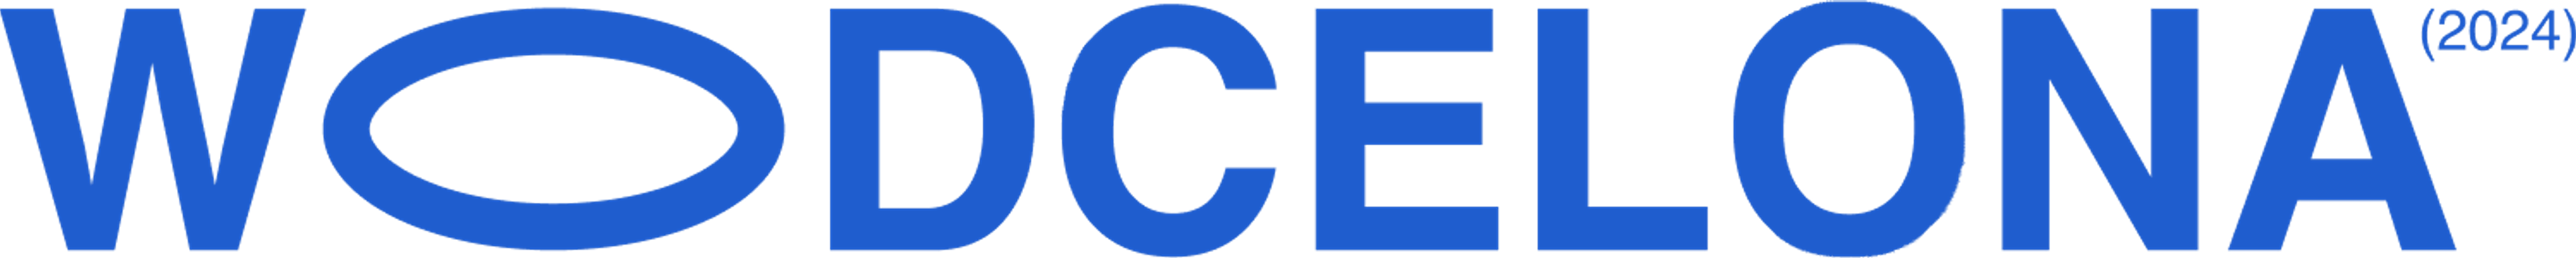 Wodcelona logo azul